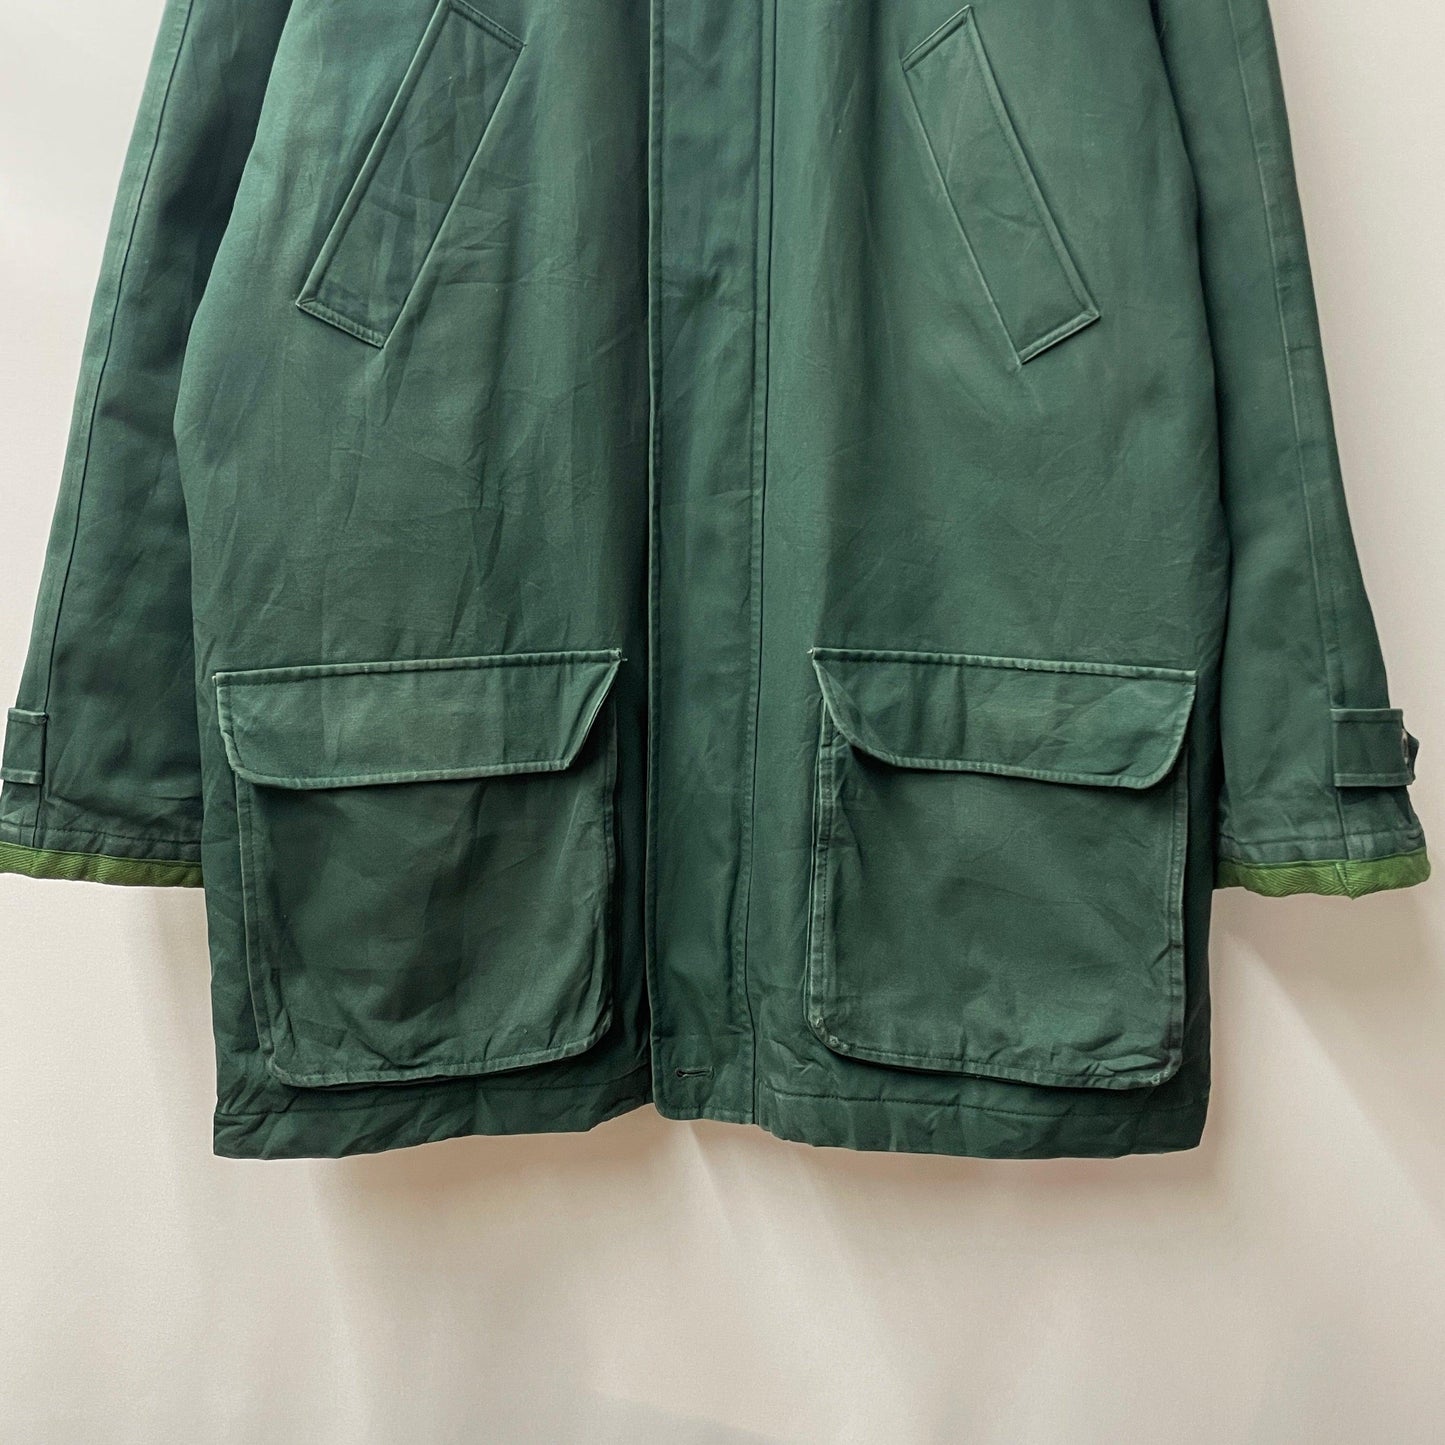 burberrys jacket burberry jacket burberry green work jacket